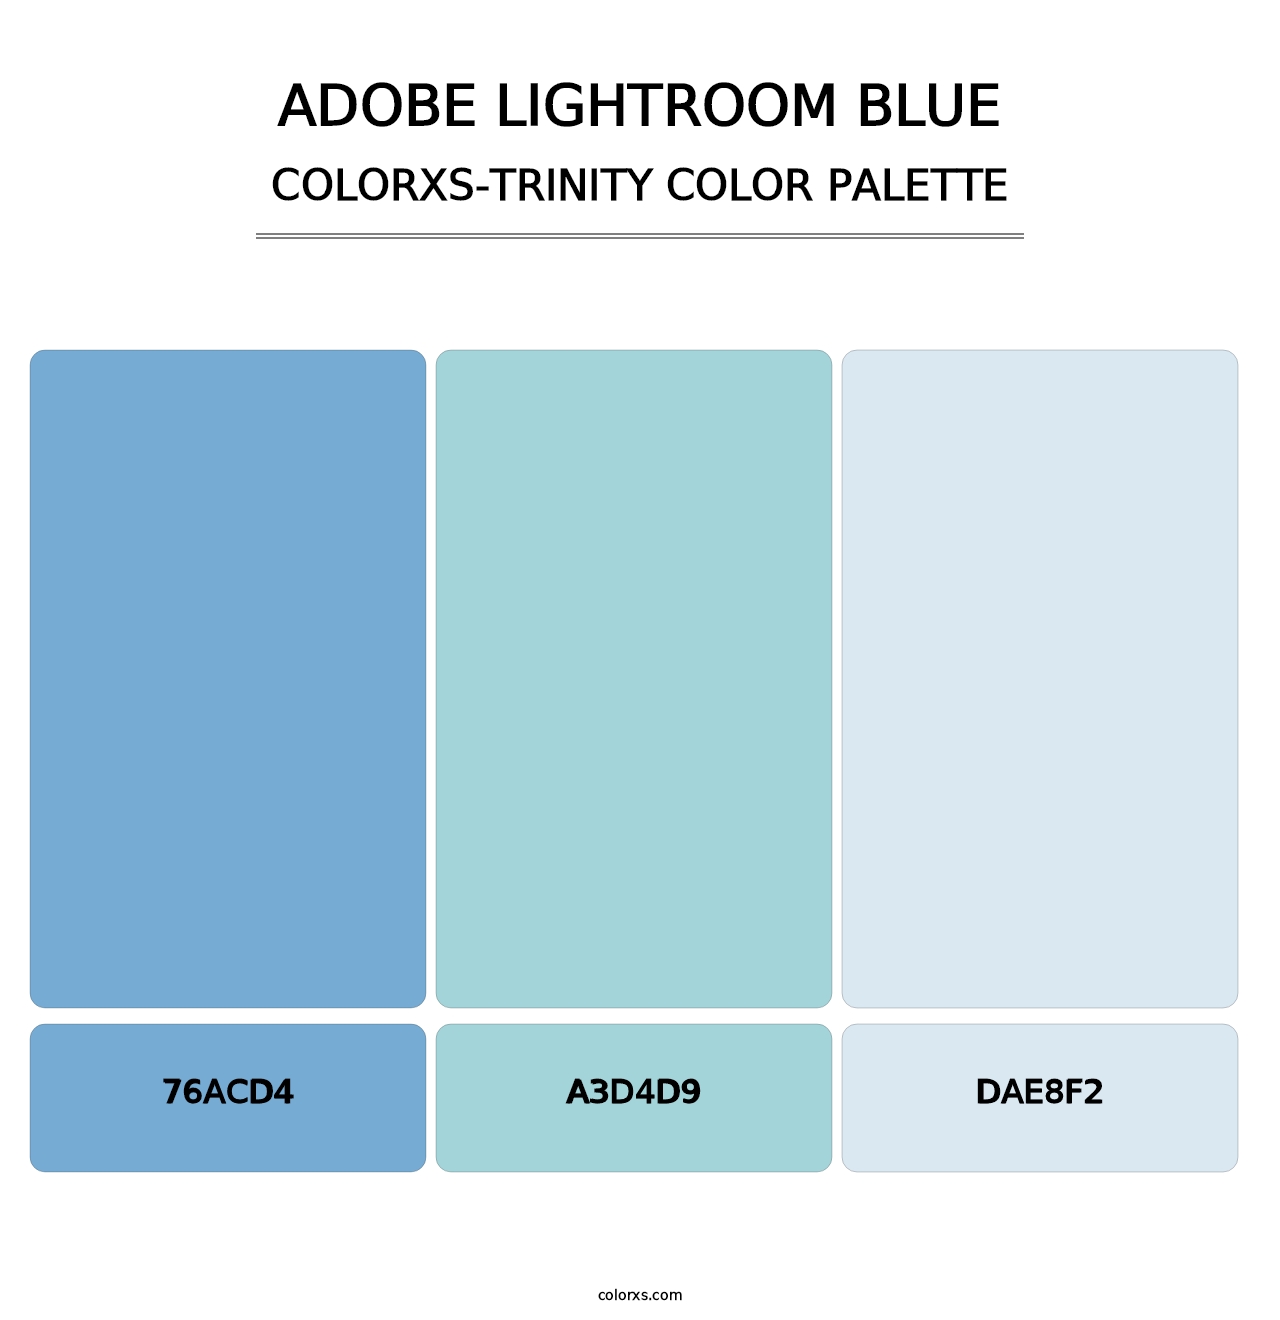 Adobe Lightroom Blue - Colorxs Trinity Palette